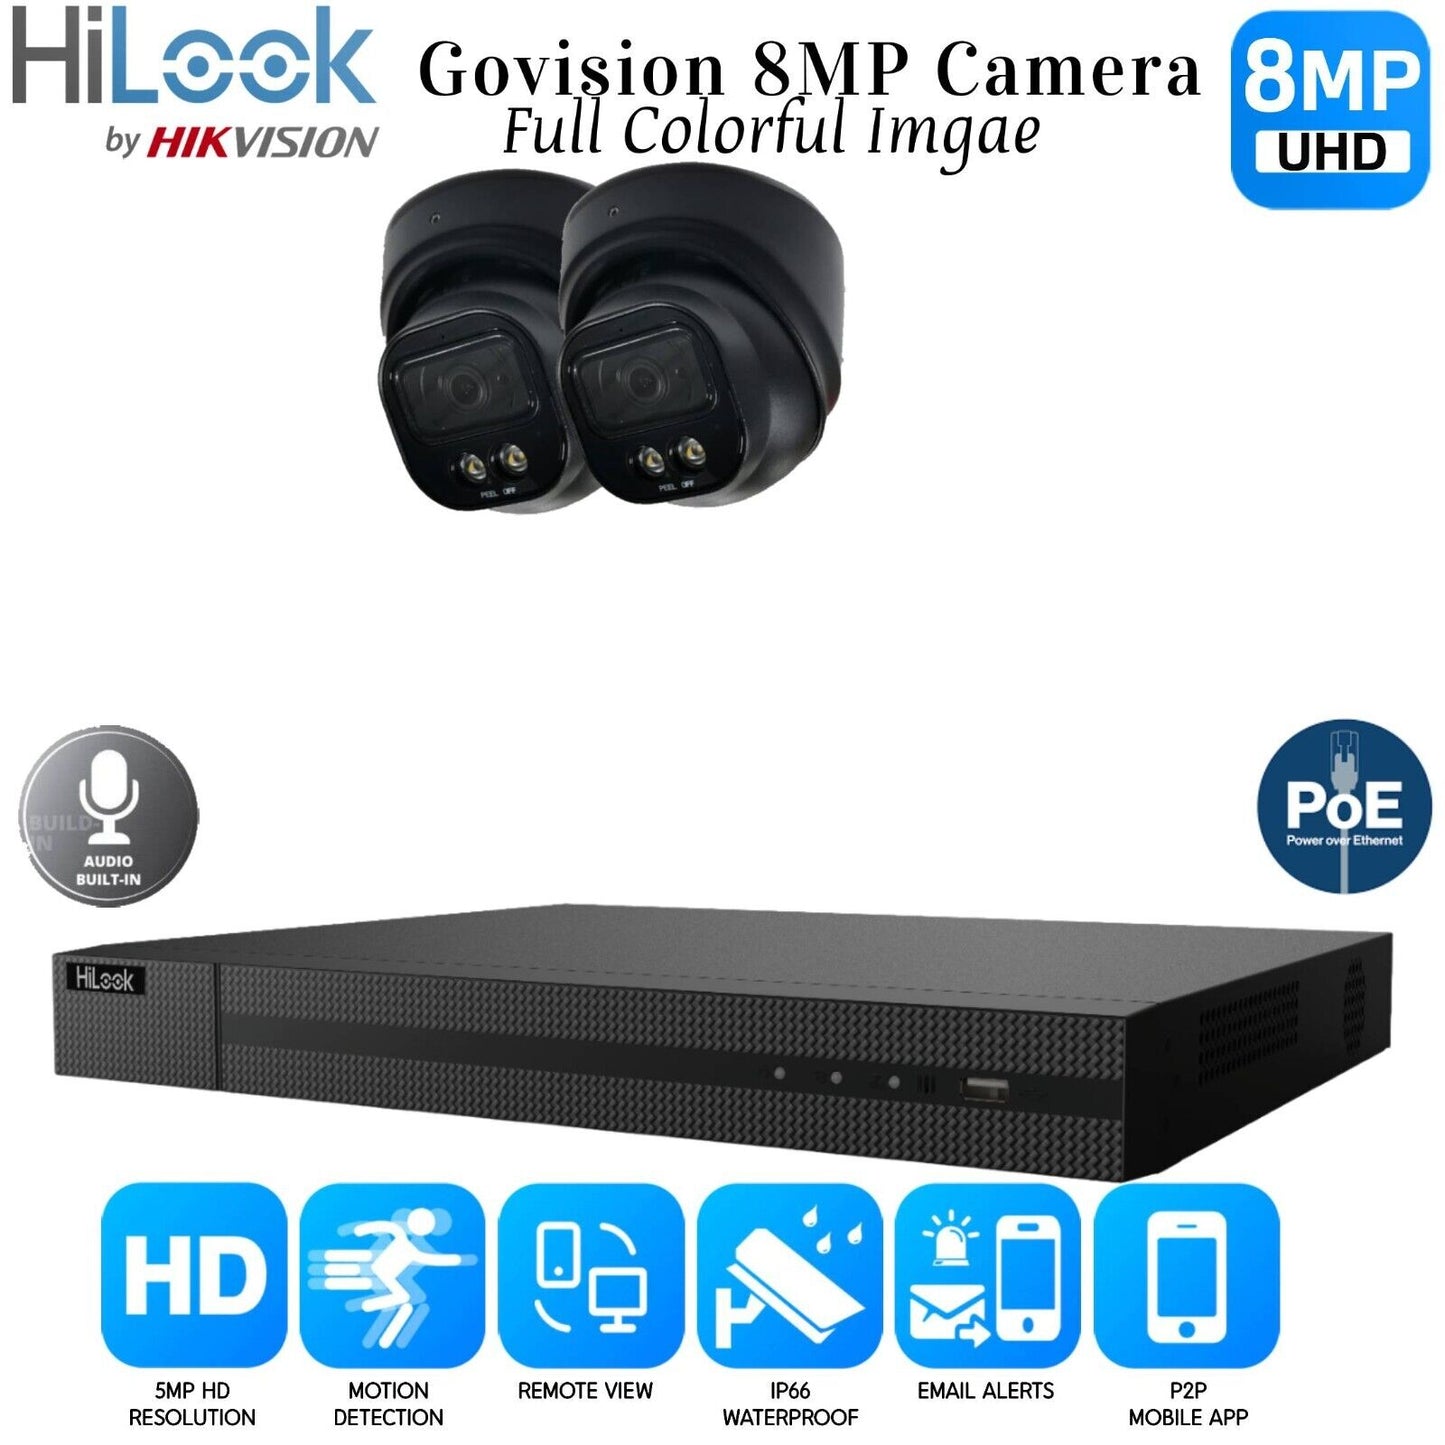 4K HIKVISION COLORVU AUDIO CCTV SYSTEM IP POE NVR 8MP CAMERA MIC NIGHTVISION KIT 4CH NVR 2xCameras (black) 1TB HDD